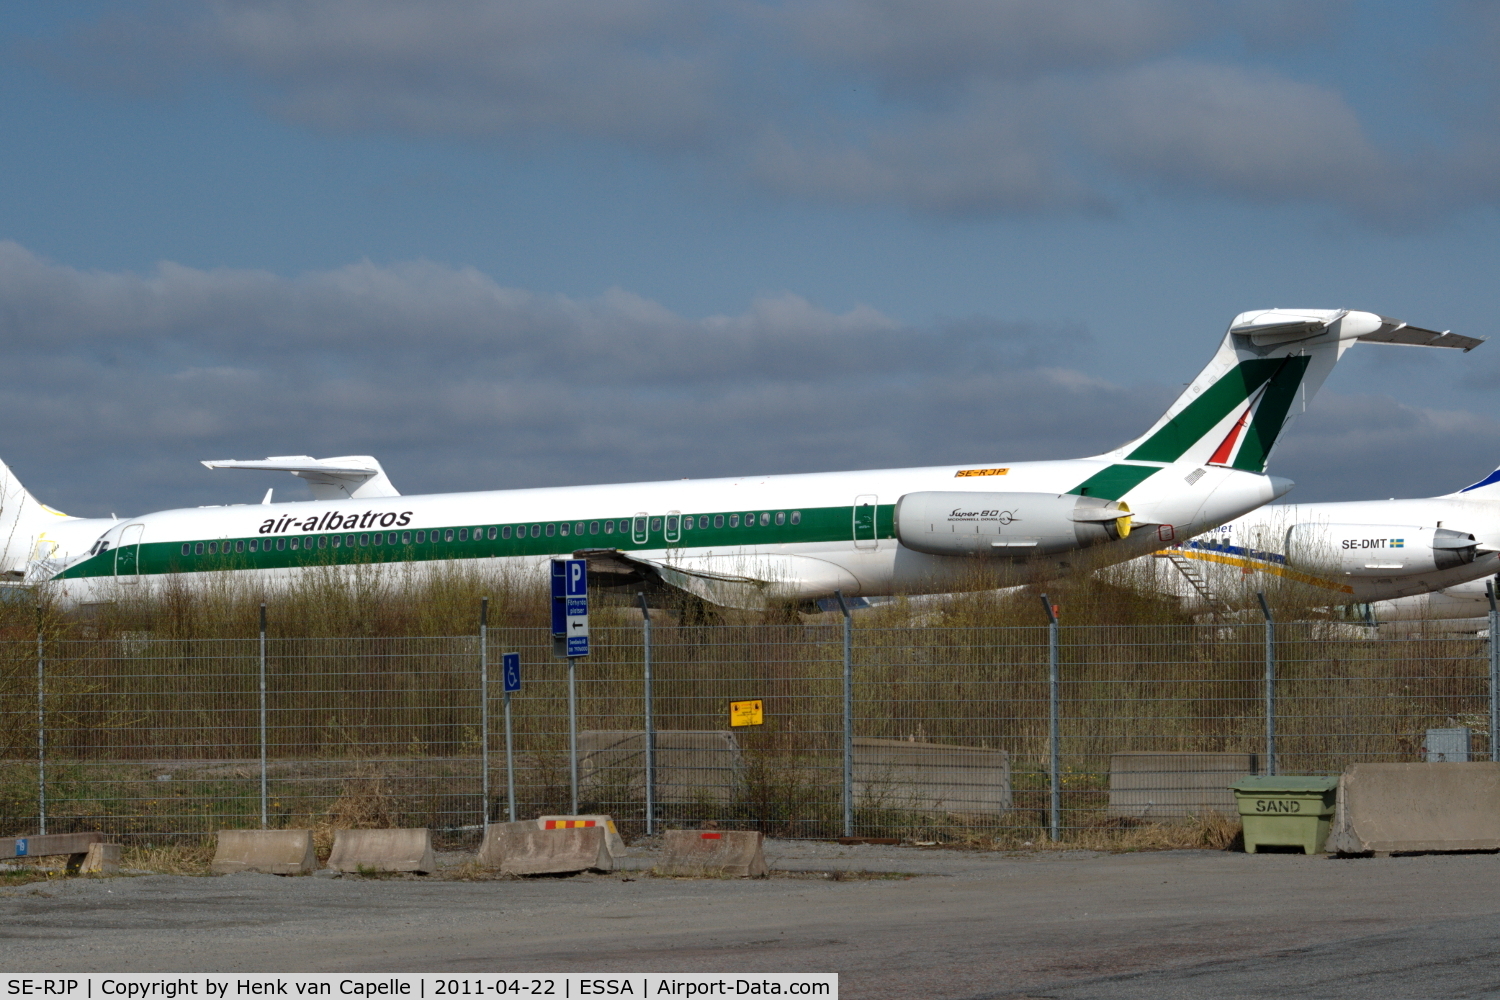 SE-RJP, 1985 McDonnell Douglas MD-82 (DC-9-82) C/N 49209/1191, MD-82 of air-albatros parked at Stockholm Arlanda airport.